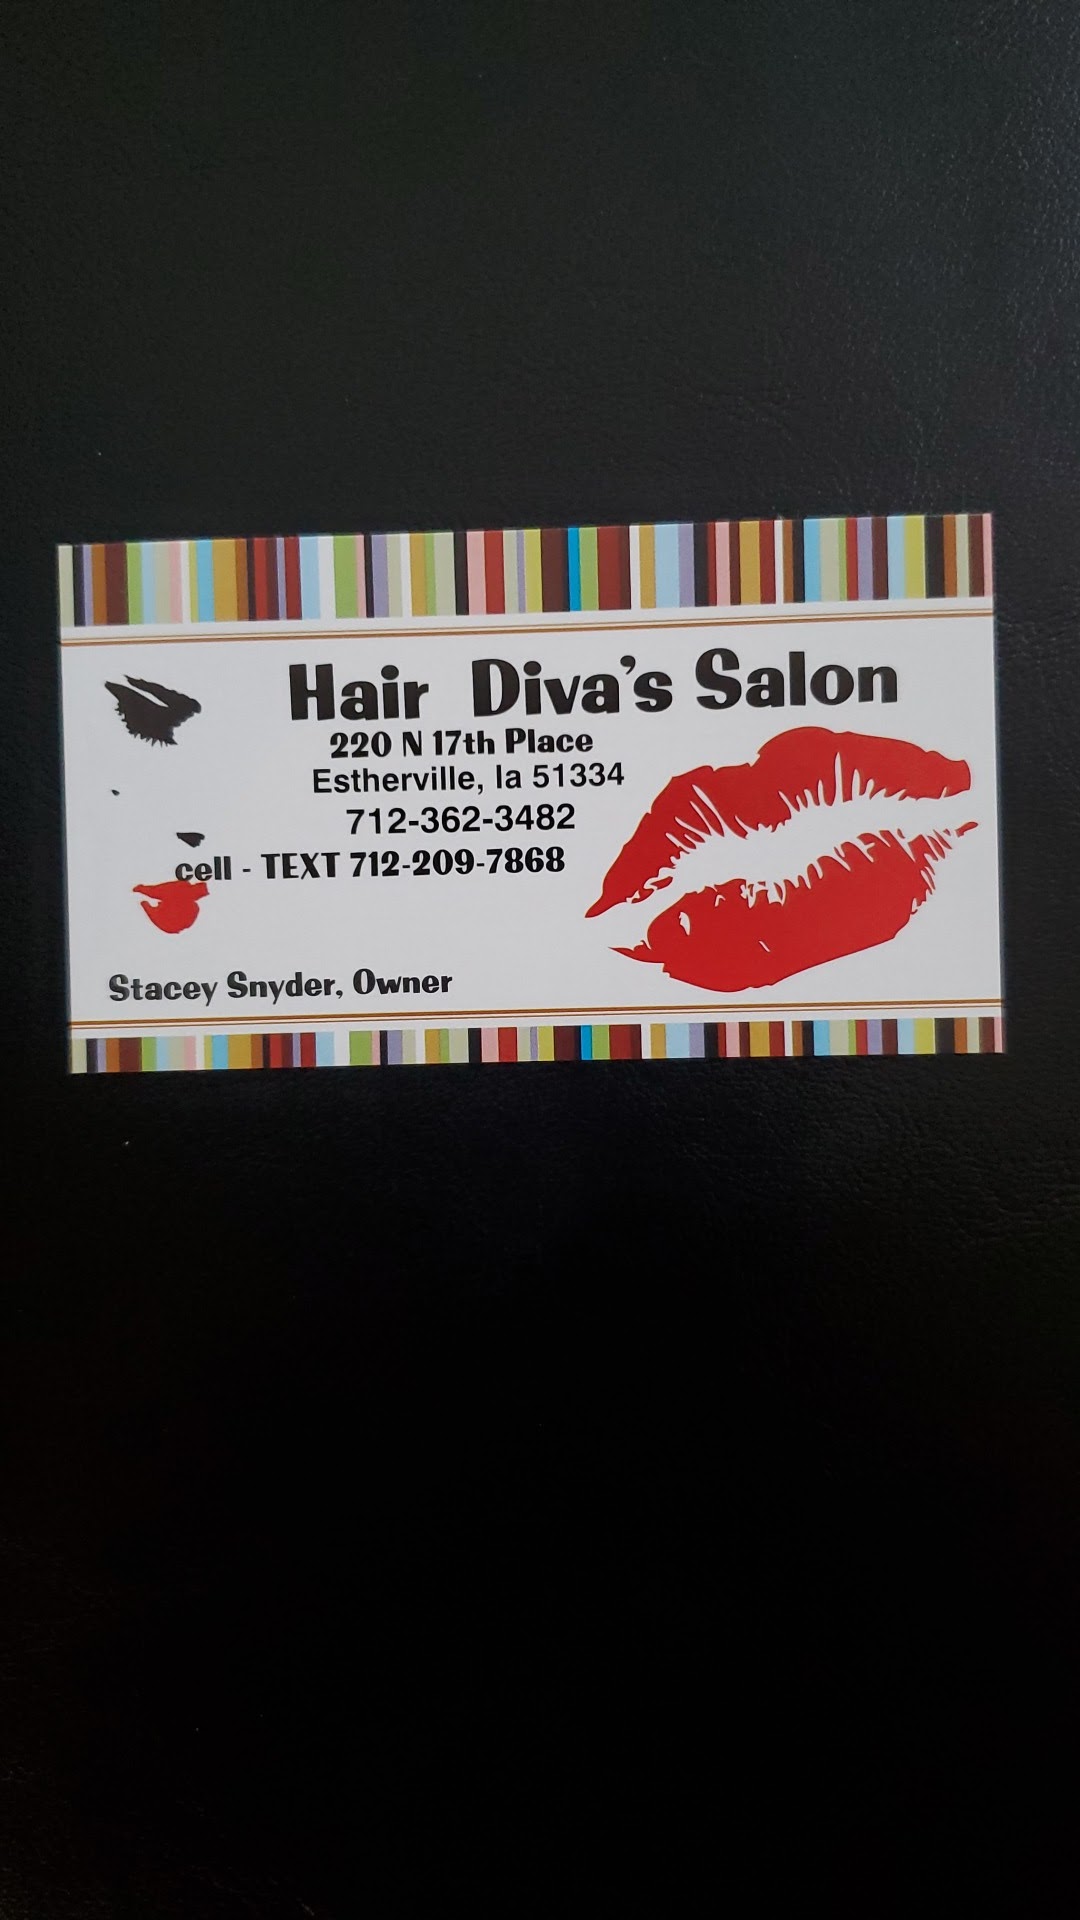 Hair Diva's Salon 220 N 17th St Pl, Estherville Iowa 51334